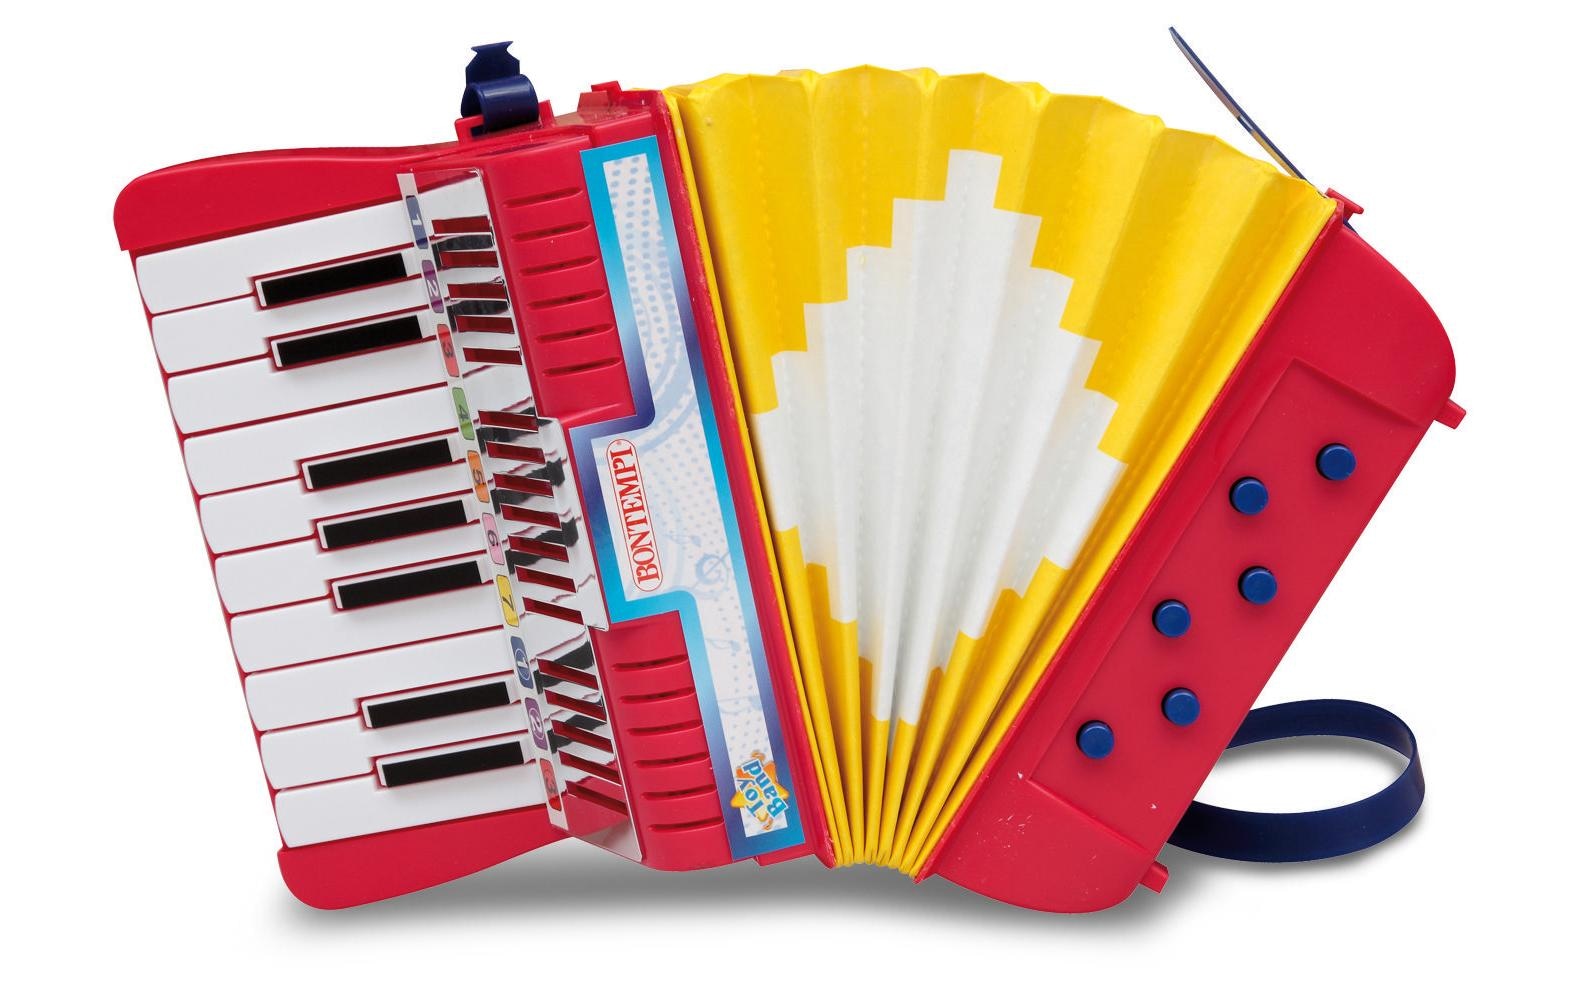 Bontempi Spielzeug-Musikinstrument »Akkordeon mit 17 Tasten C-E«